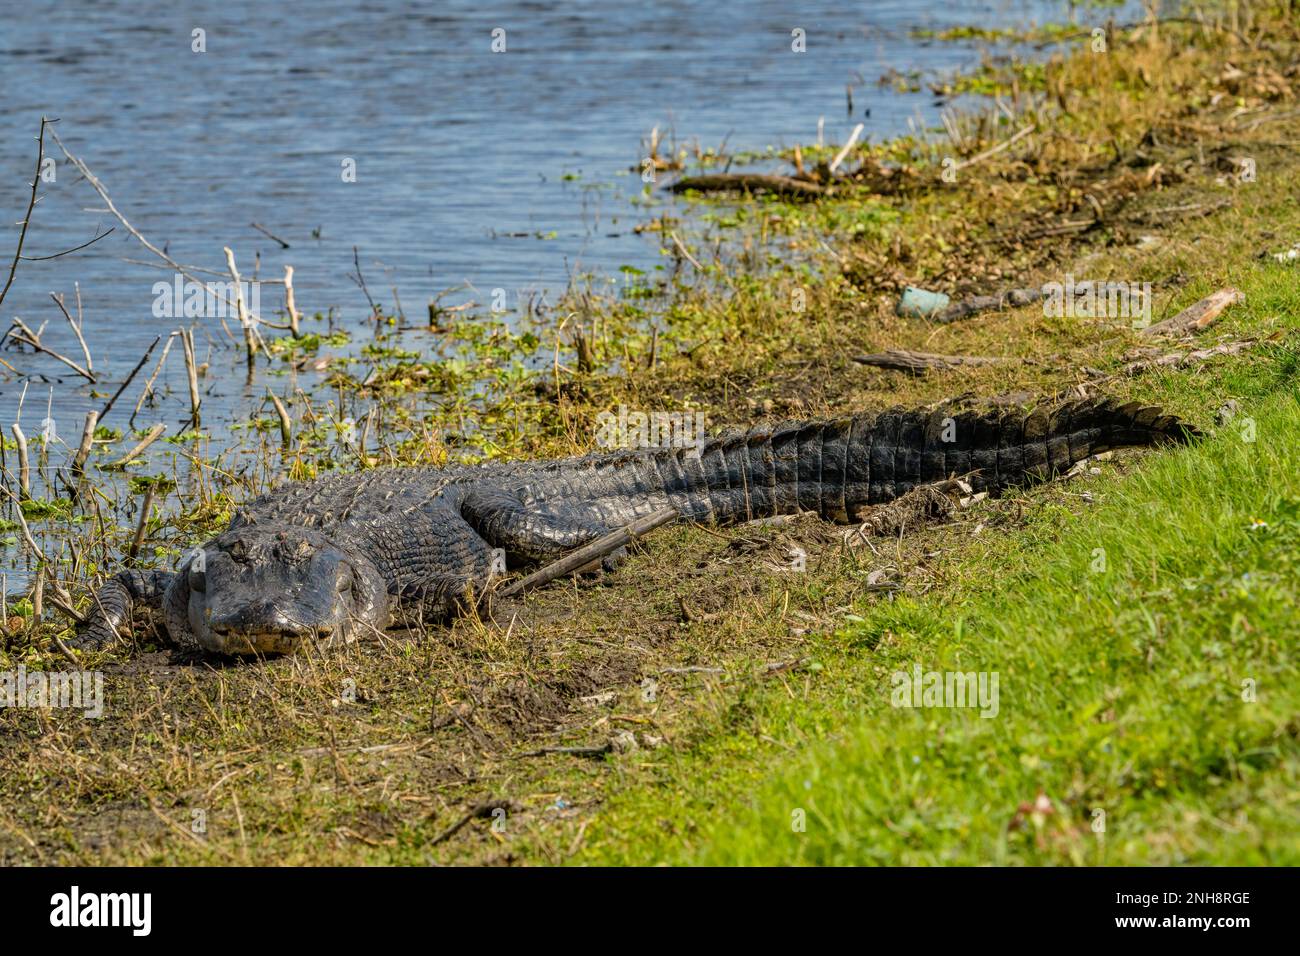 Florida alligator Stock Photo